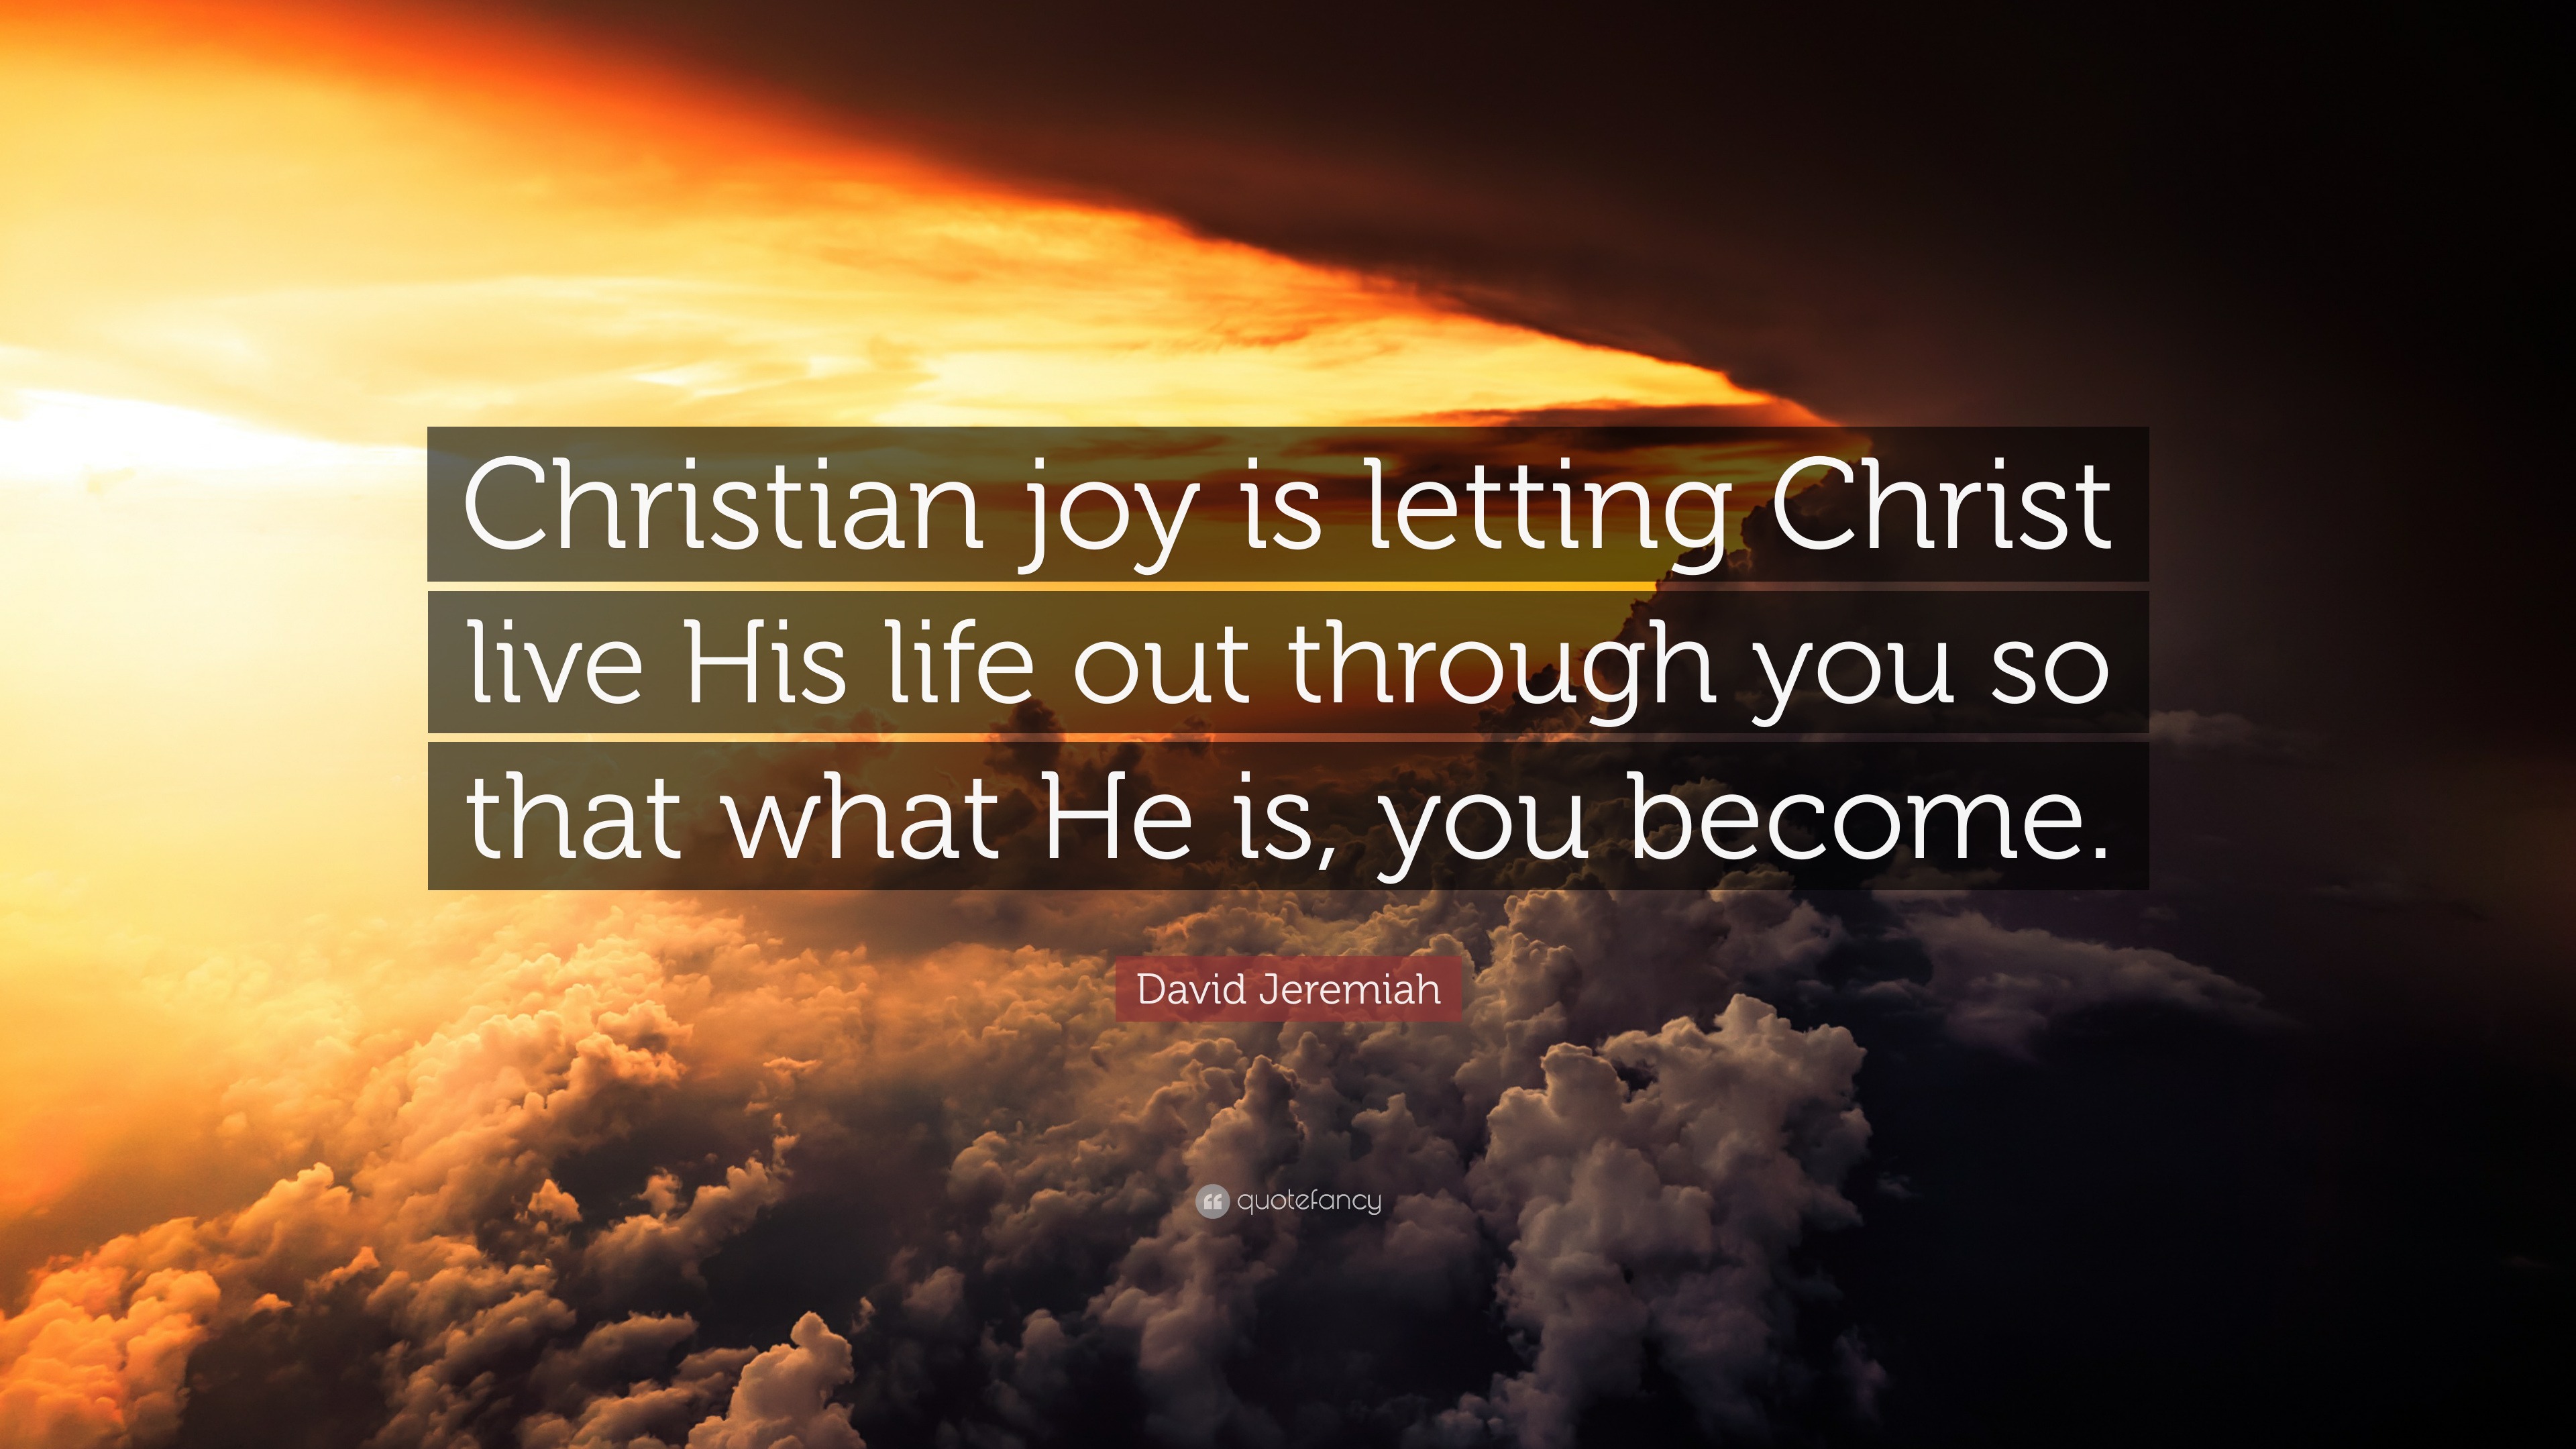 Christian quote on joy